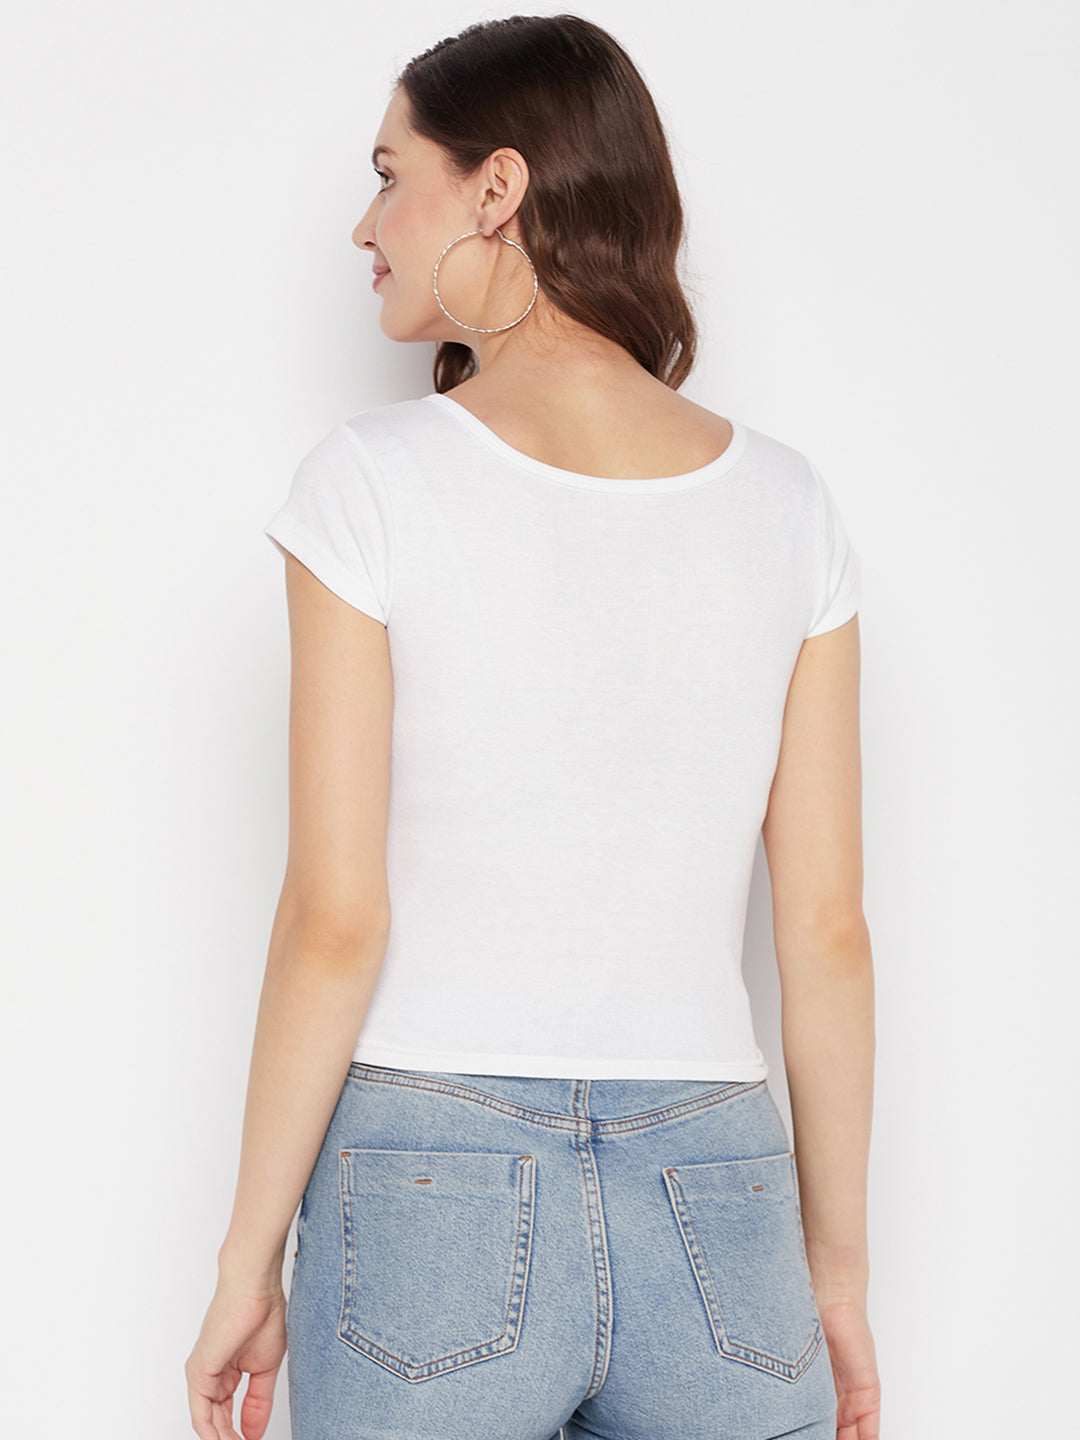 Clora White Solid Regular Fit Crop Top